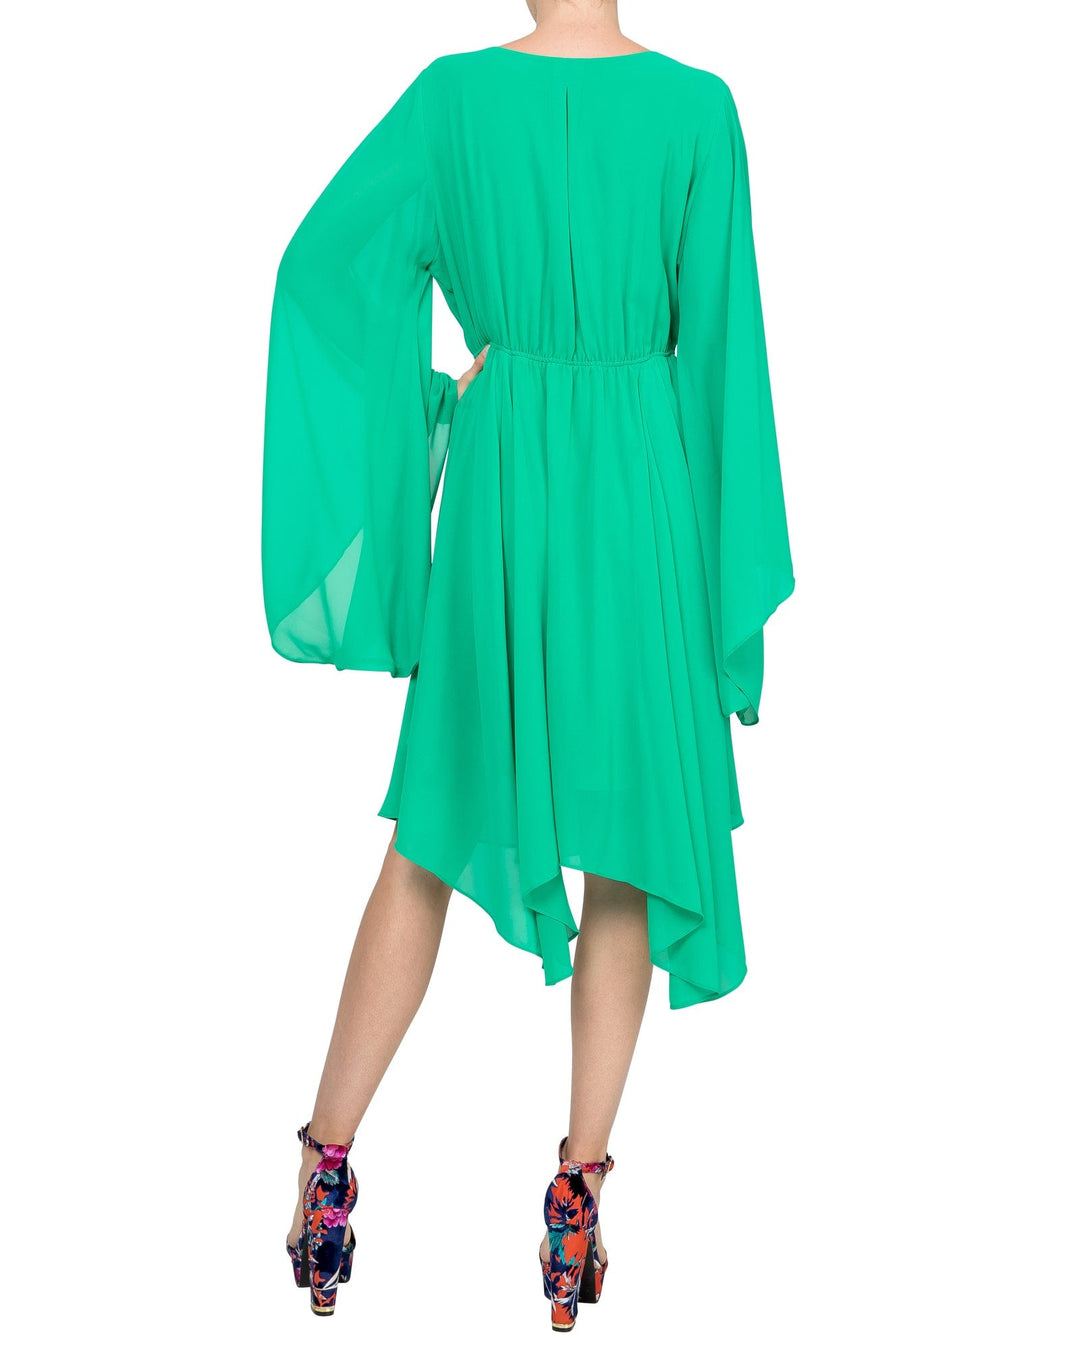 Sunset Dress - Emerald by Meghan Fabulous